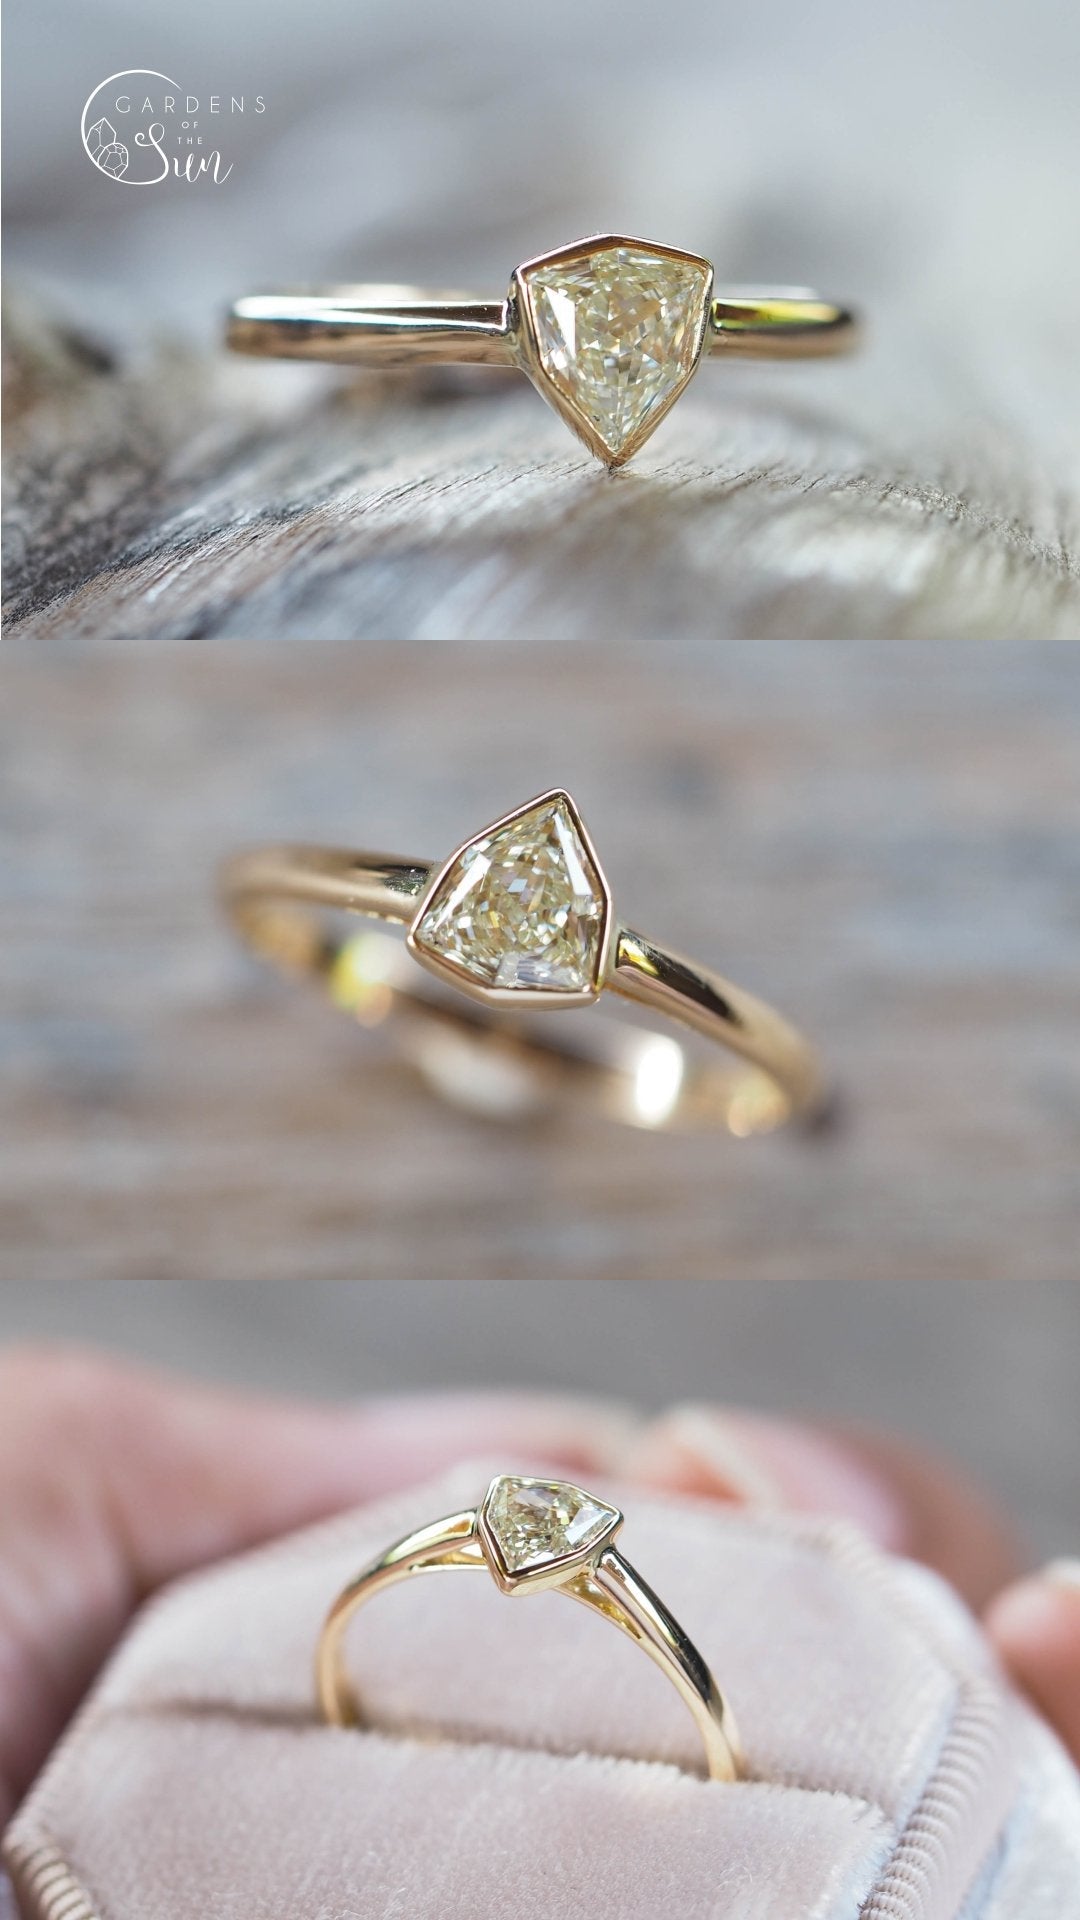 Gee Woods Artemis shield cut diamond engagement ring